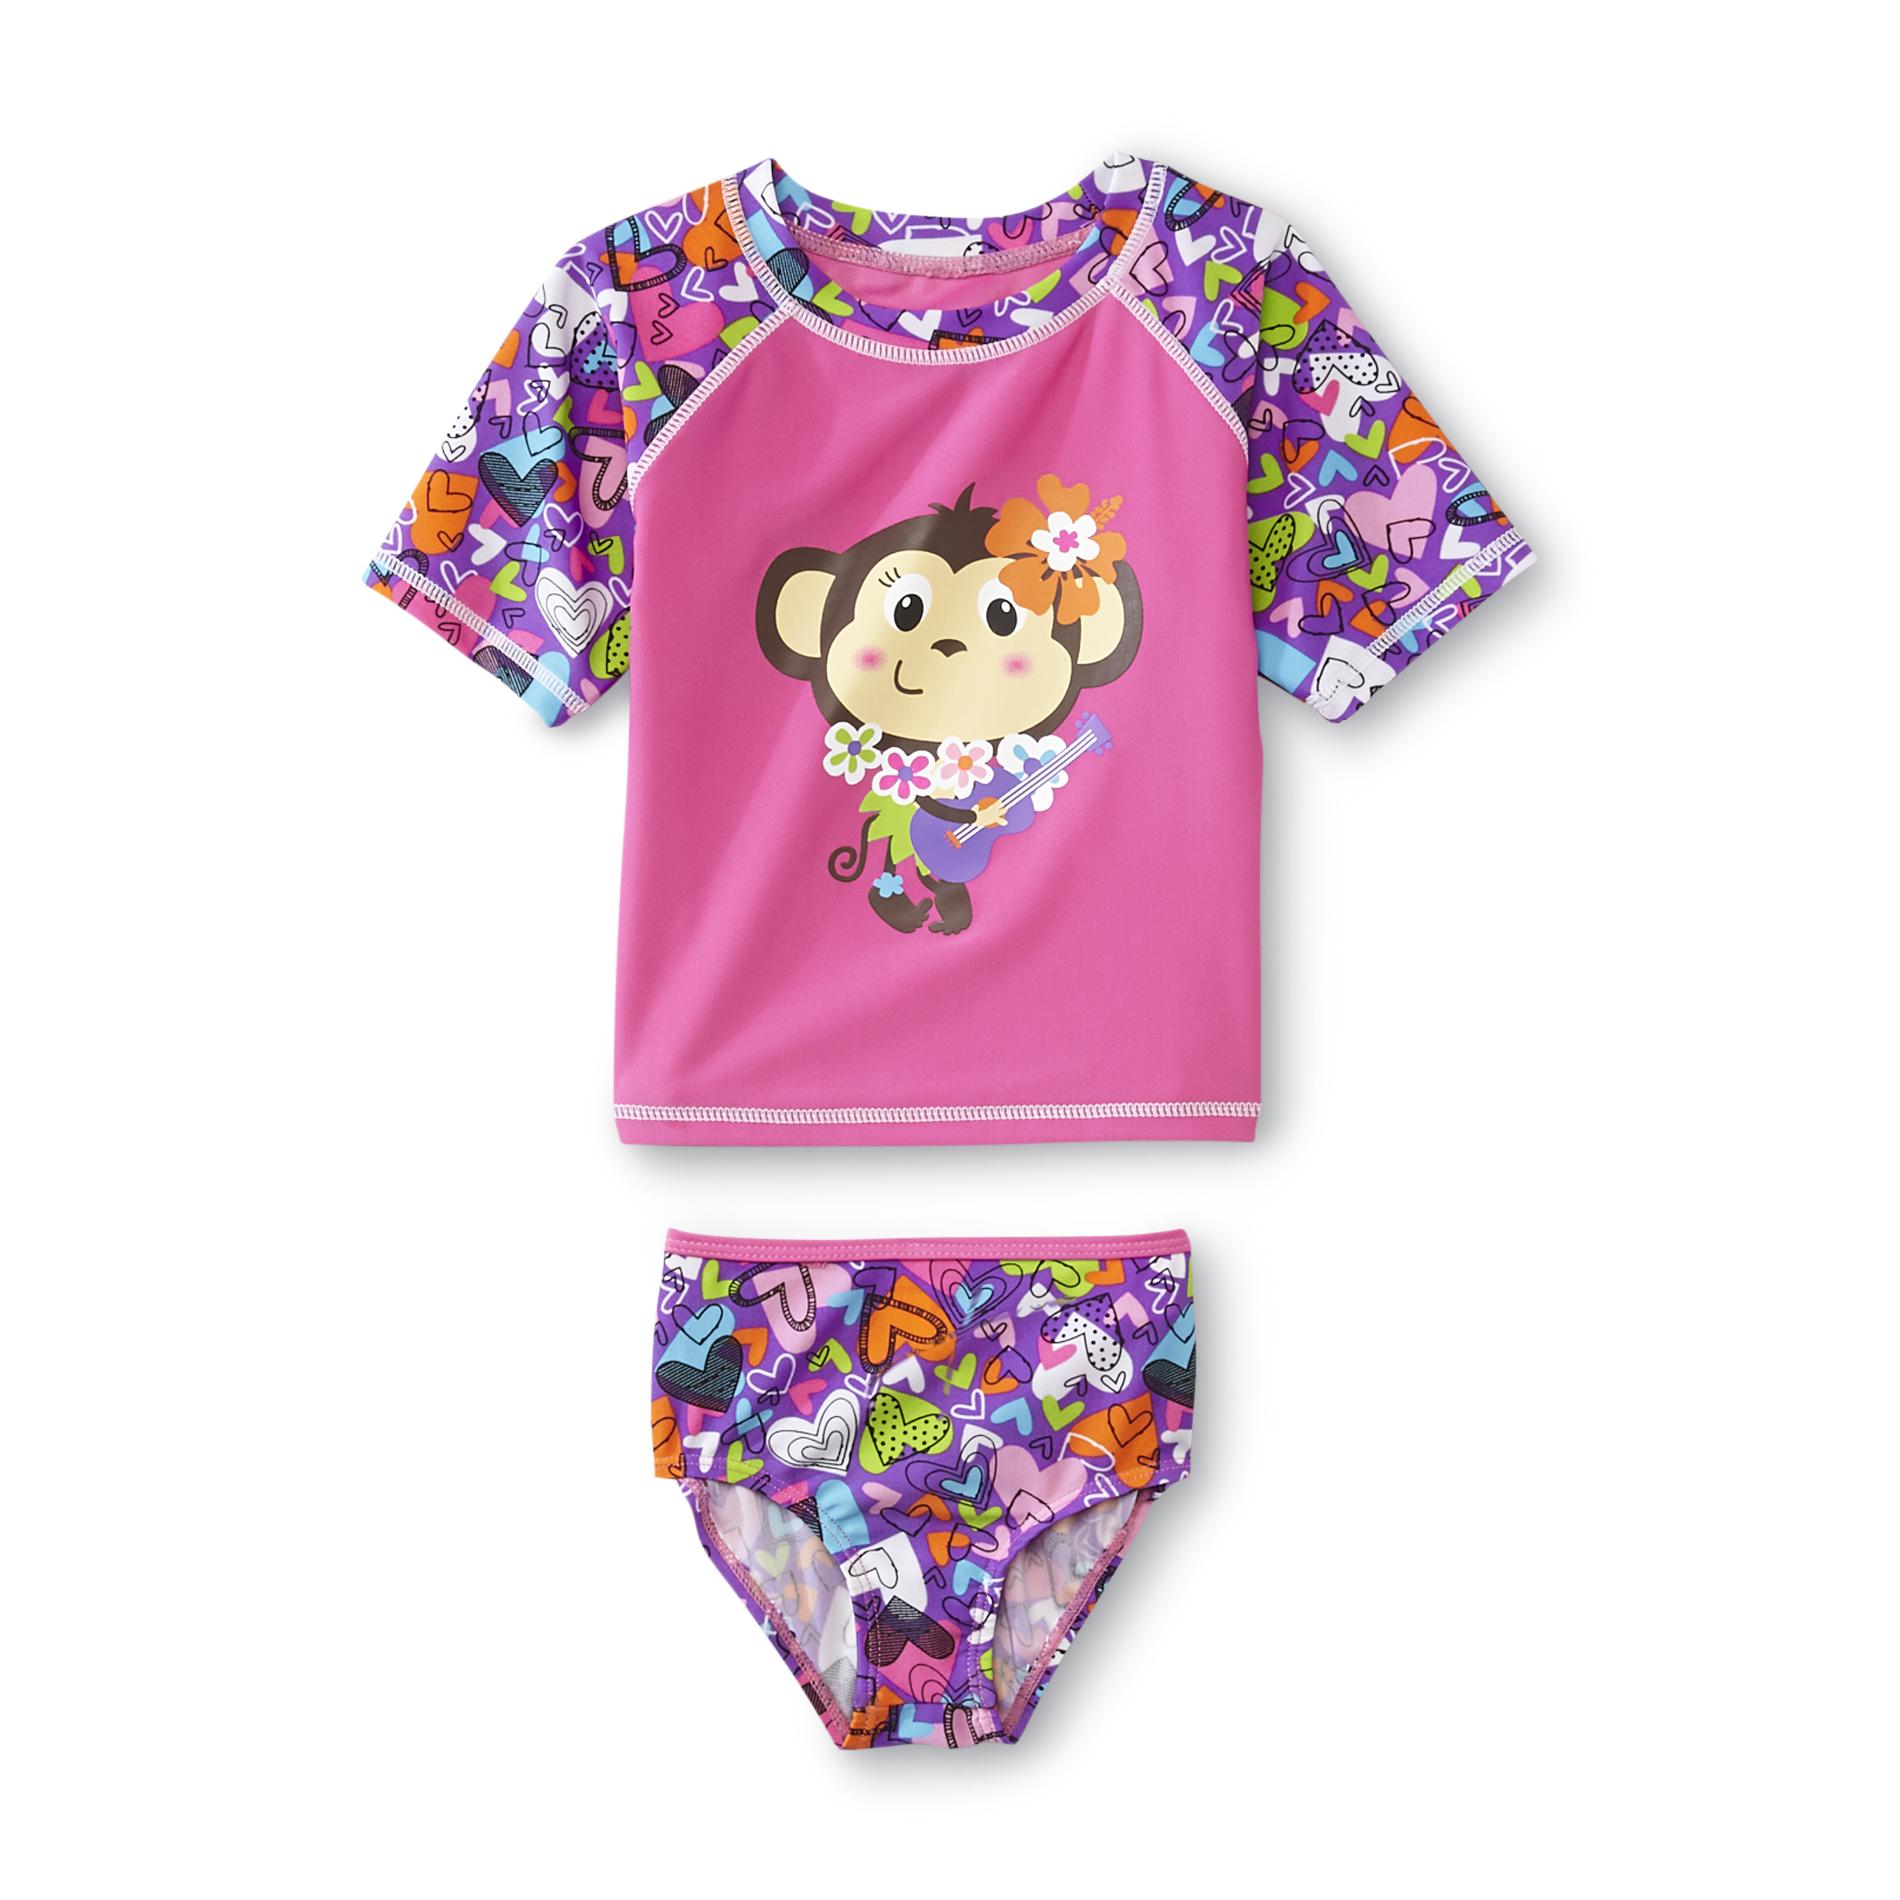 Joe Boxer Infant & Toddler Girl's Rash Guard Shirt & Bikini Bottoms - Monkey & Hearts